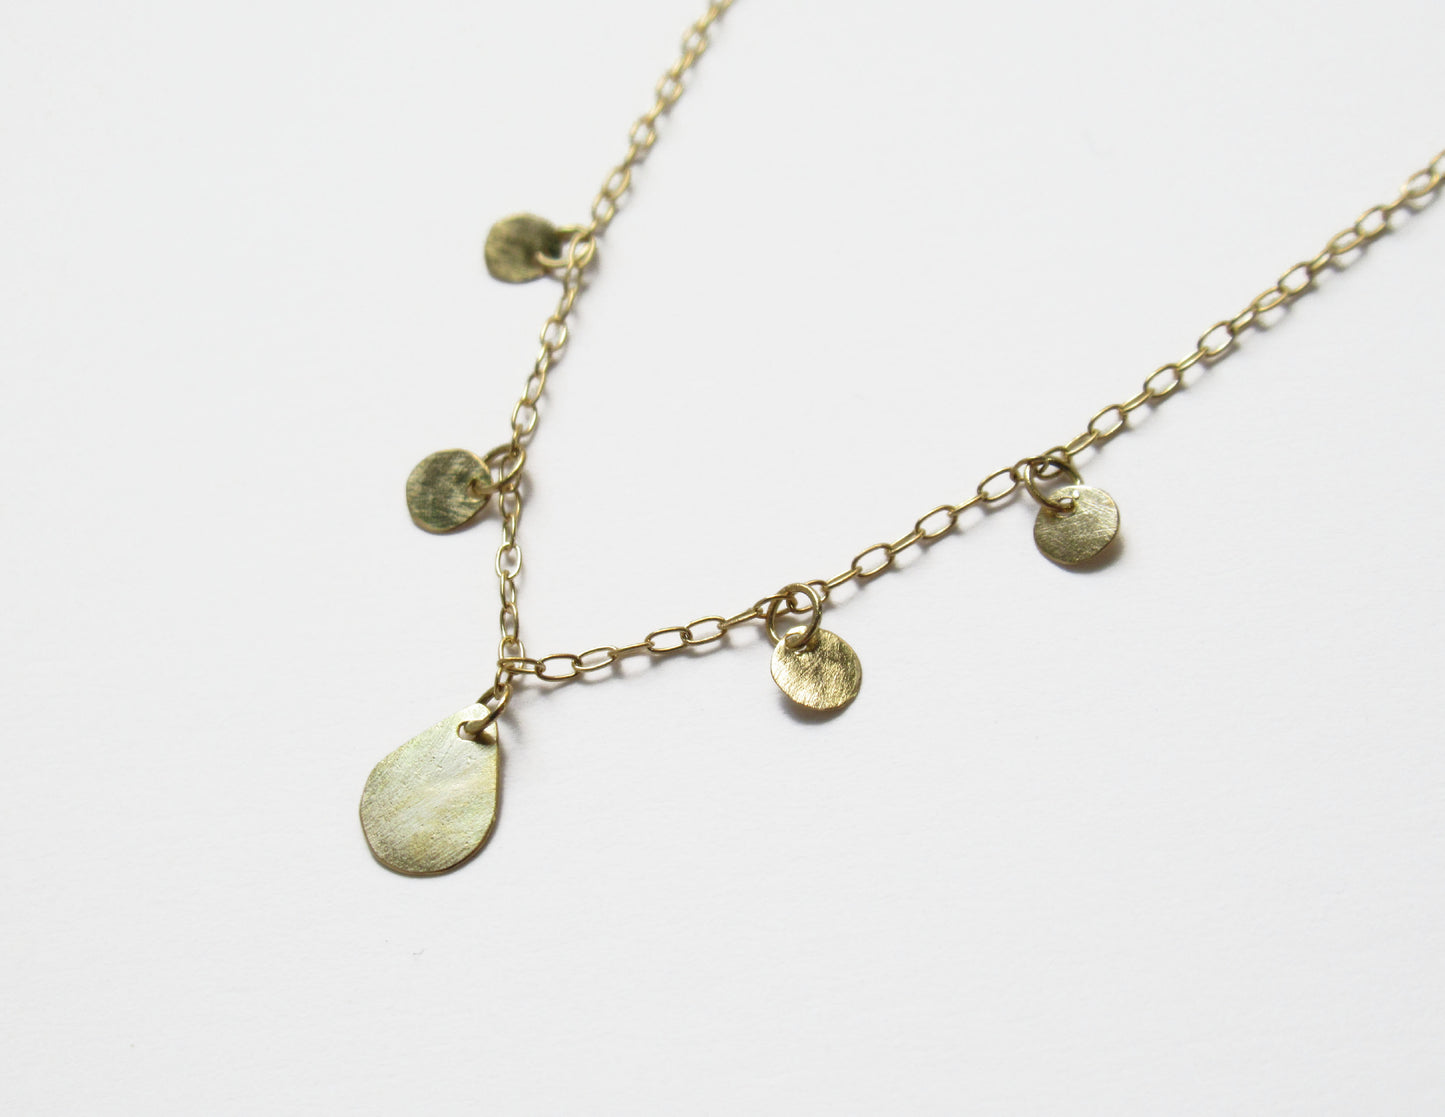 garland necklace 2 (K18/50cm)